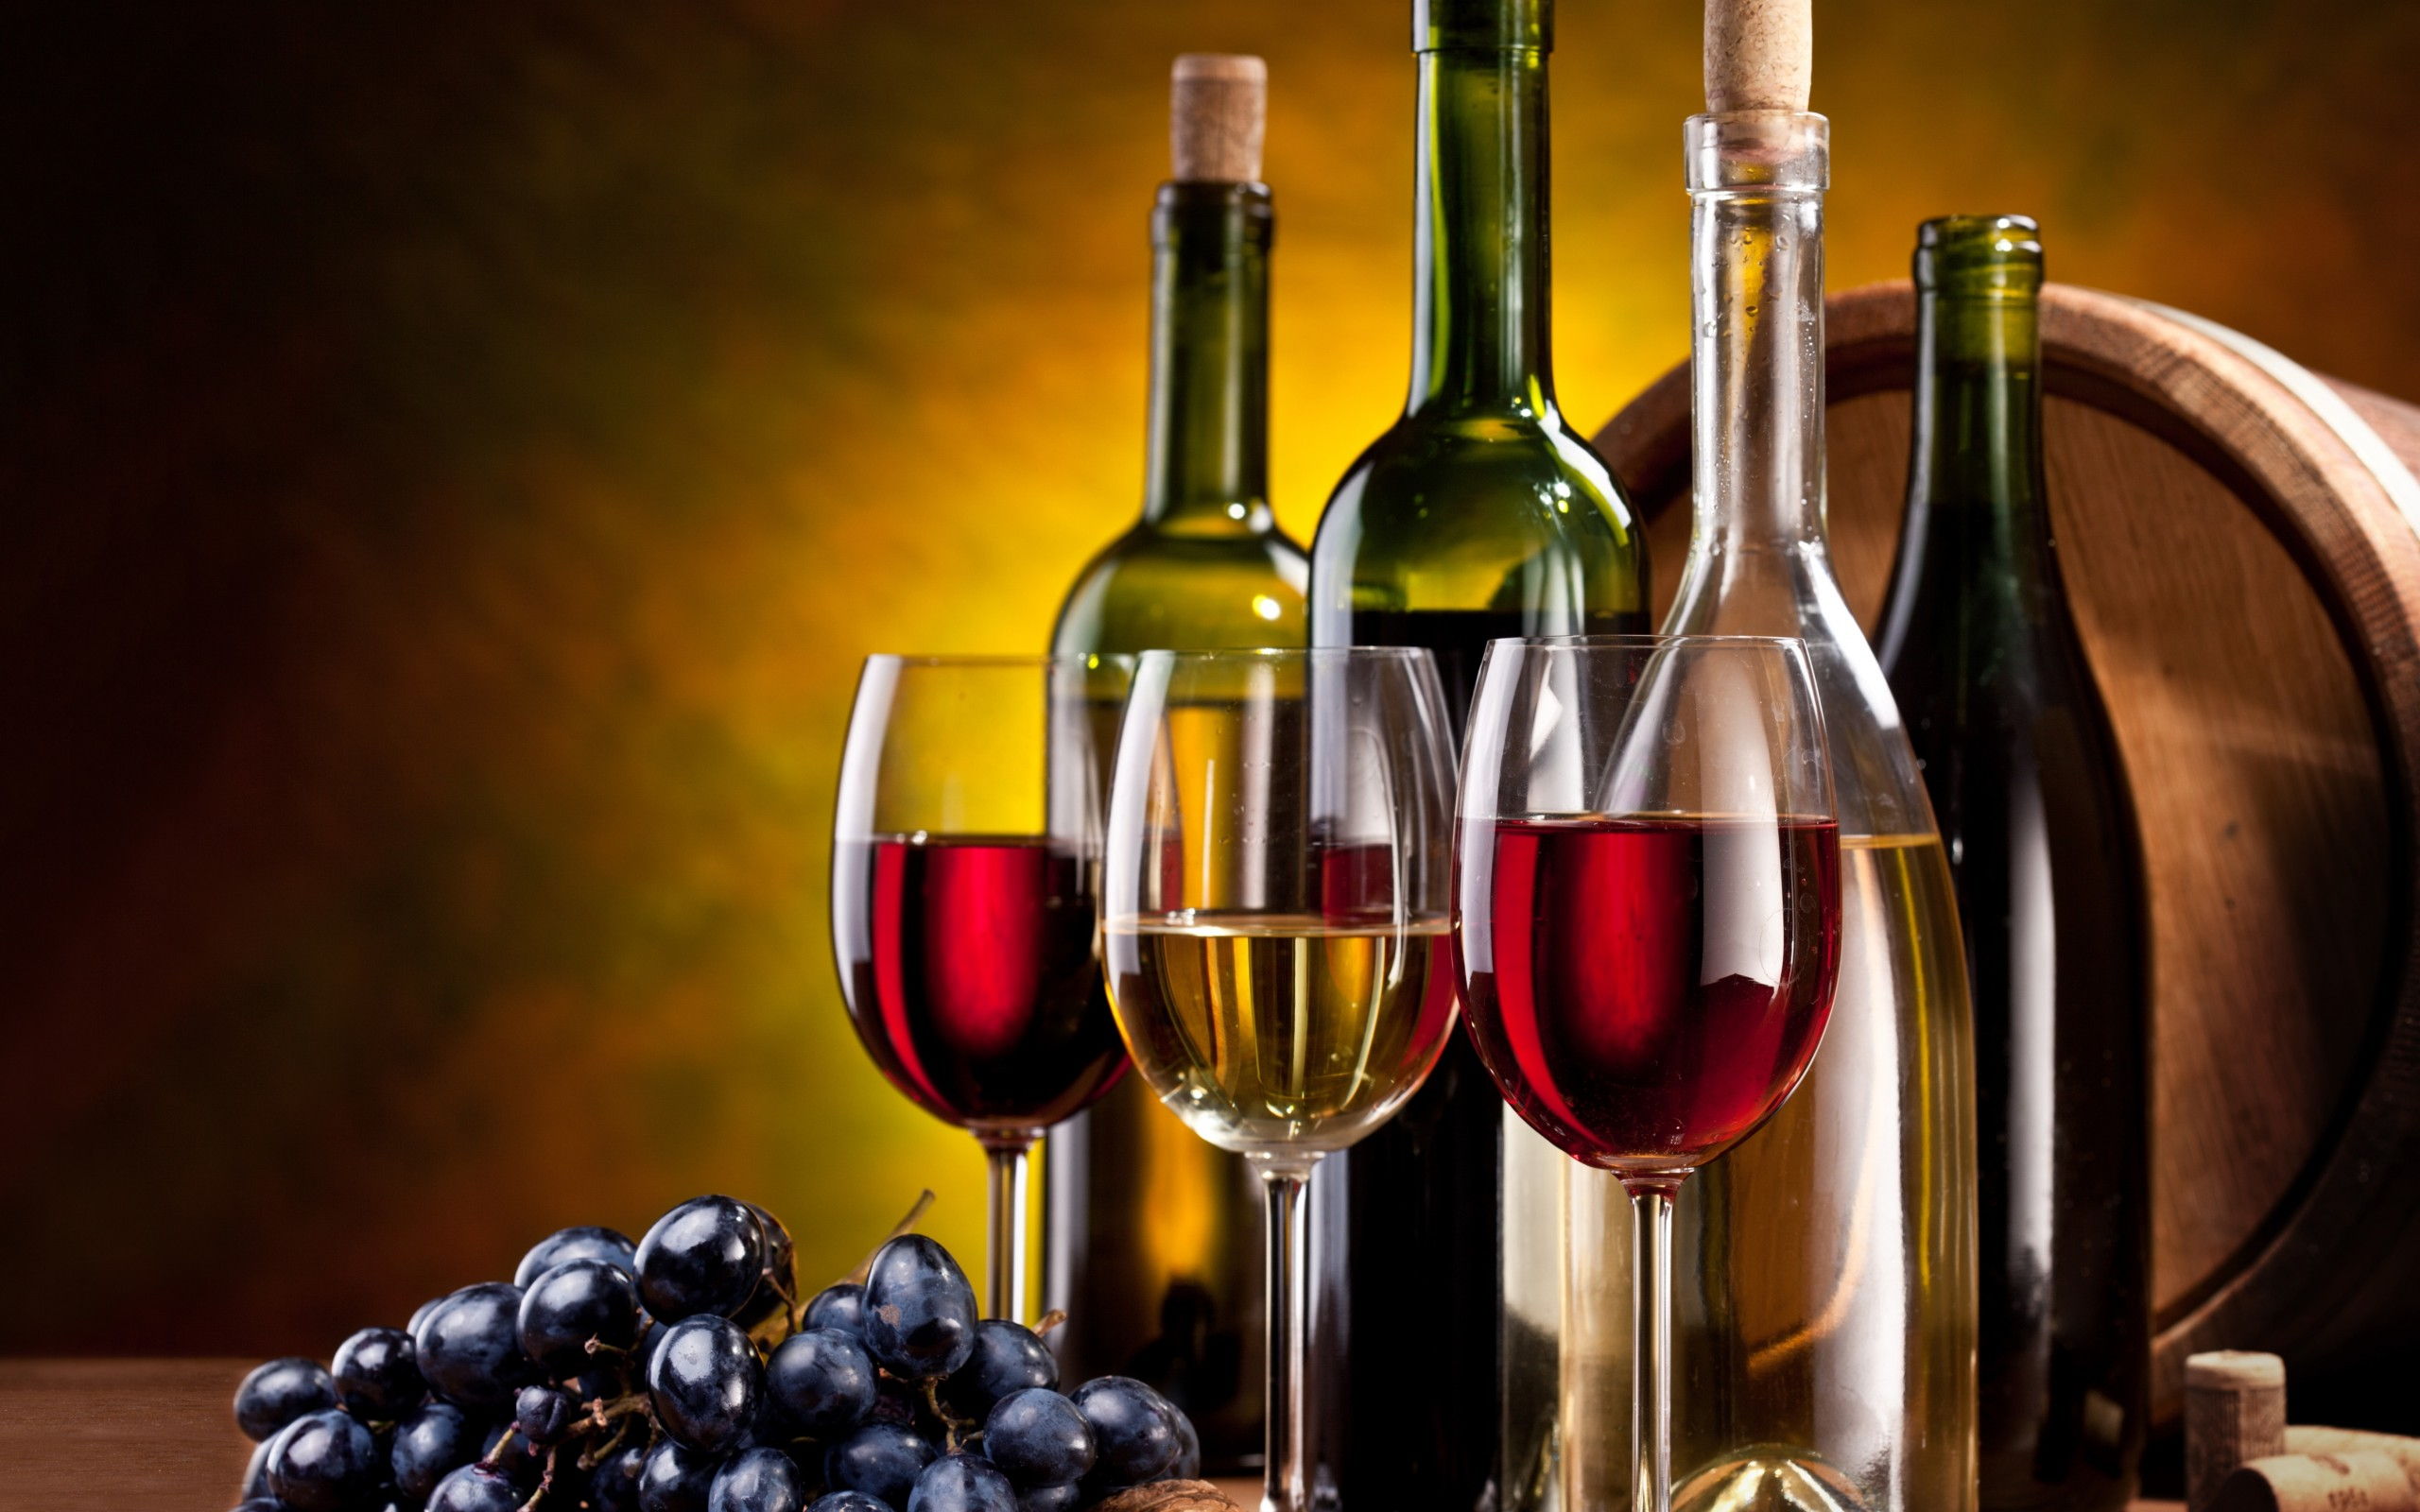 2018 Wine Tasting Sponsors Needed